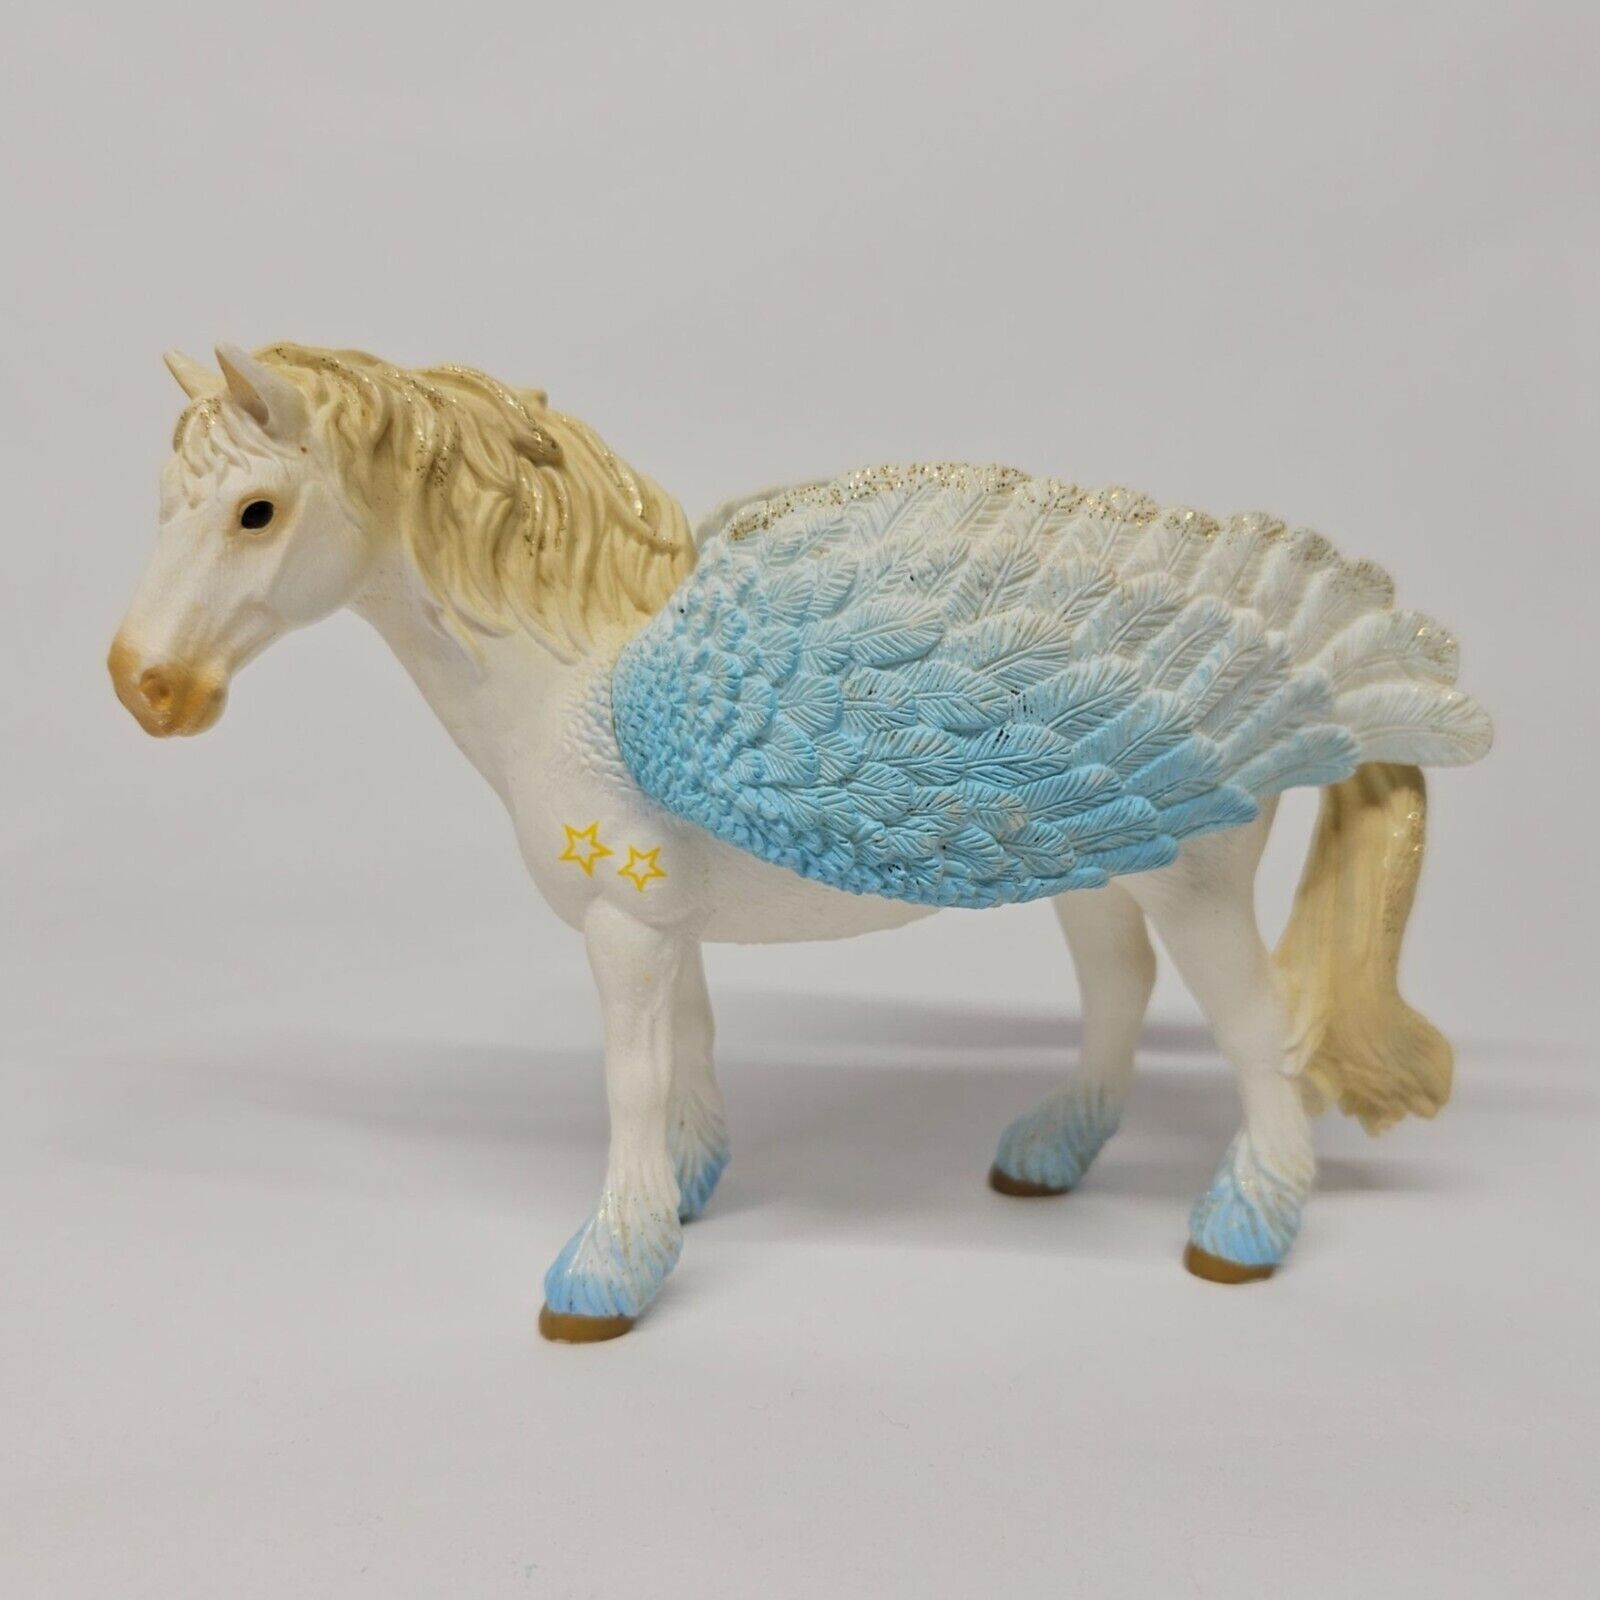 Schleich Pegasus White Blue Glitter Winged Fantasy Horse Figure 2009 D-73527